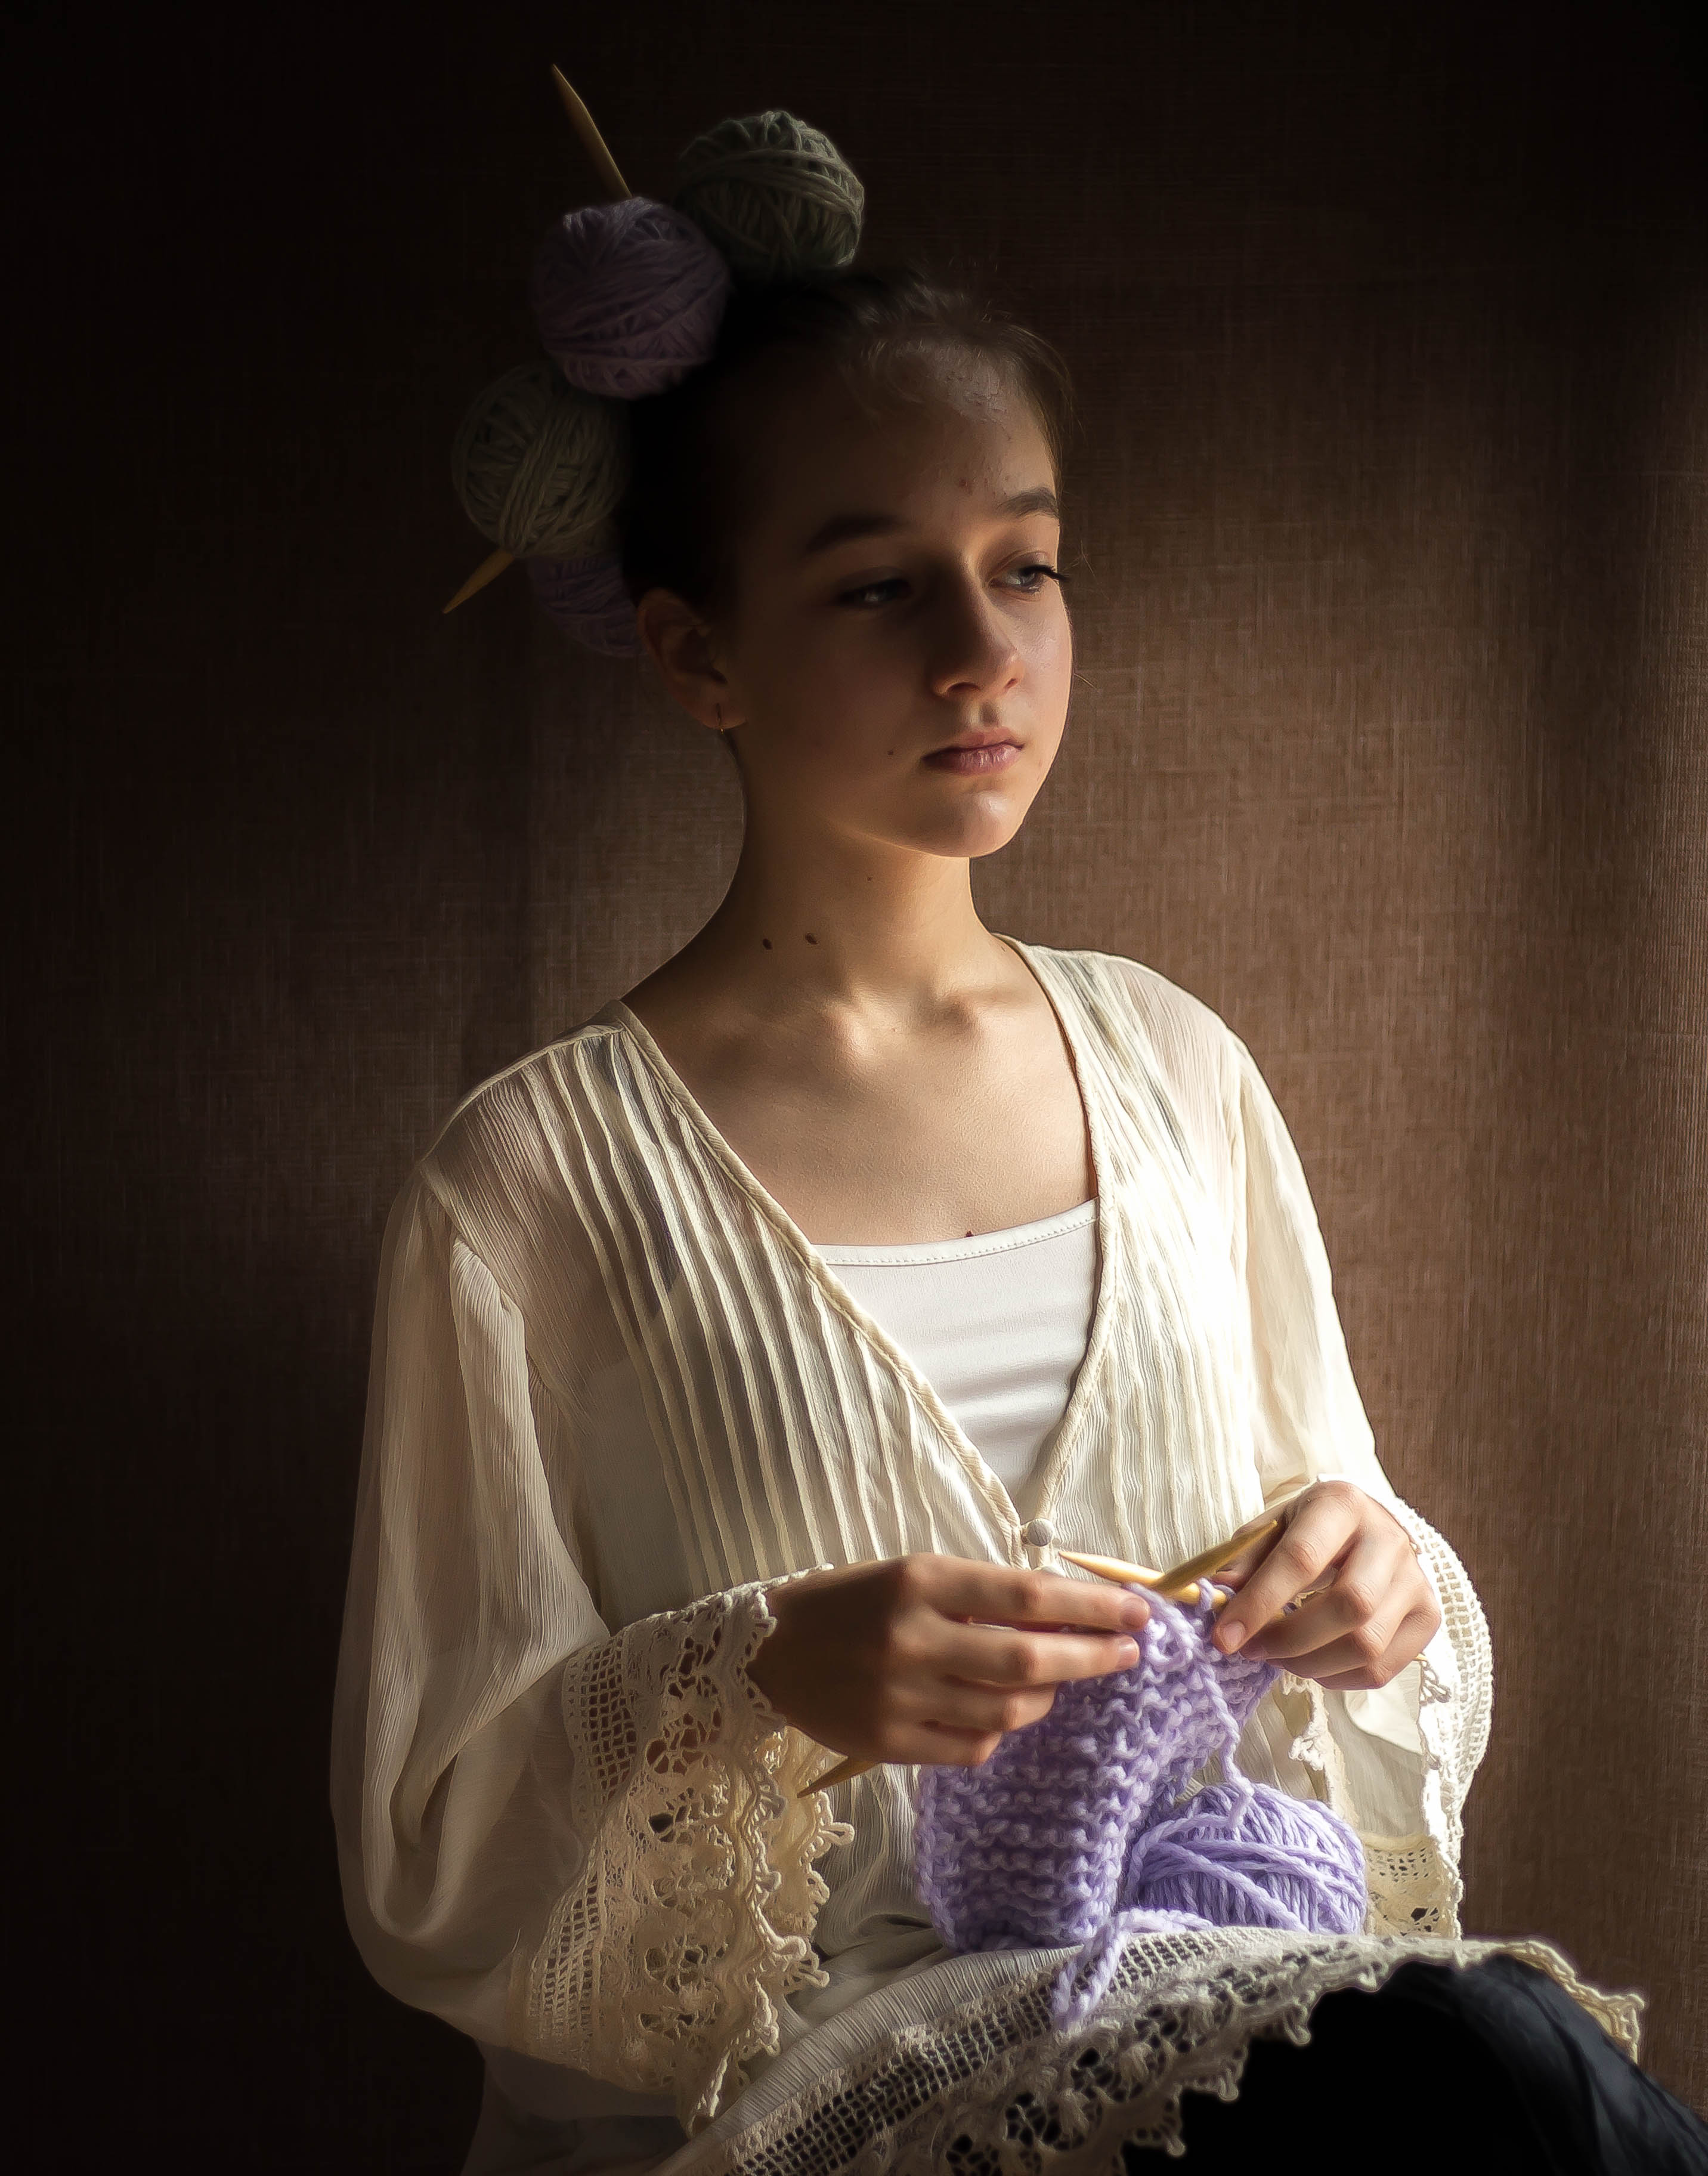 #girl # knitting #yarn # dreaming #iloveit #beautiful #happiness #children #mykids #nicepic, Lina Kozi